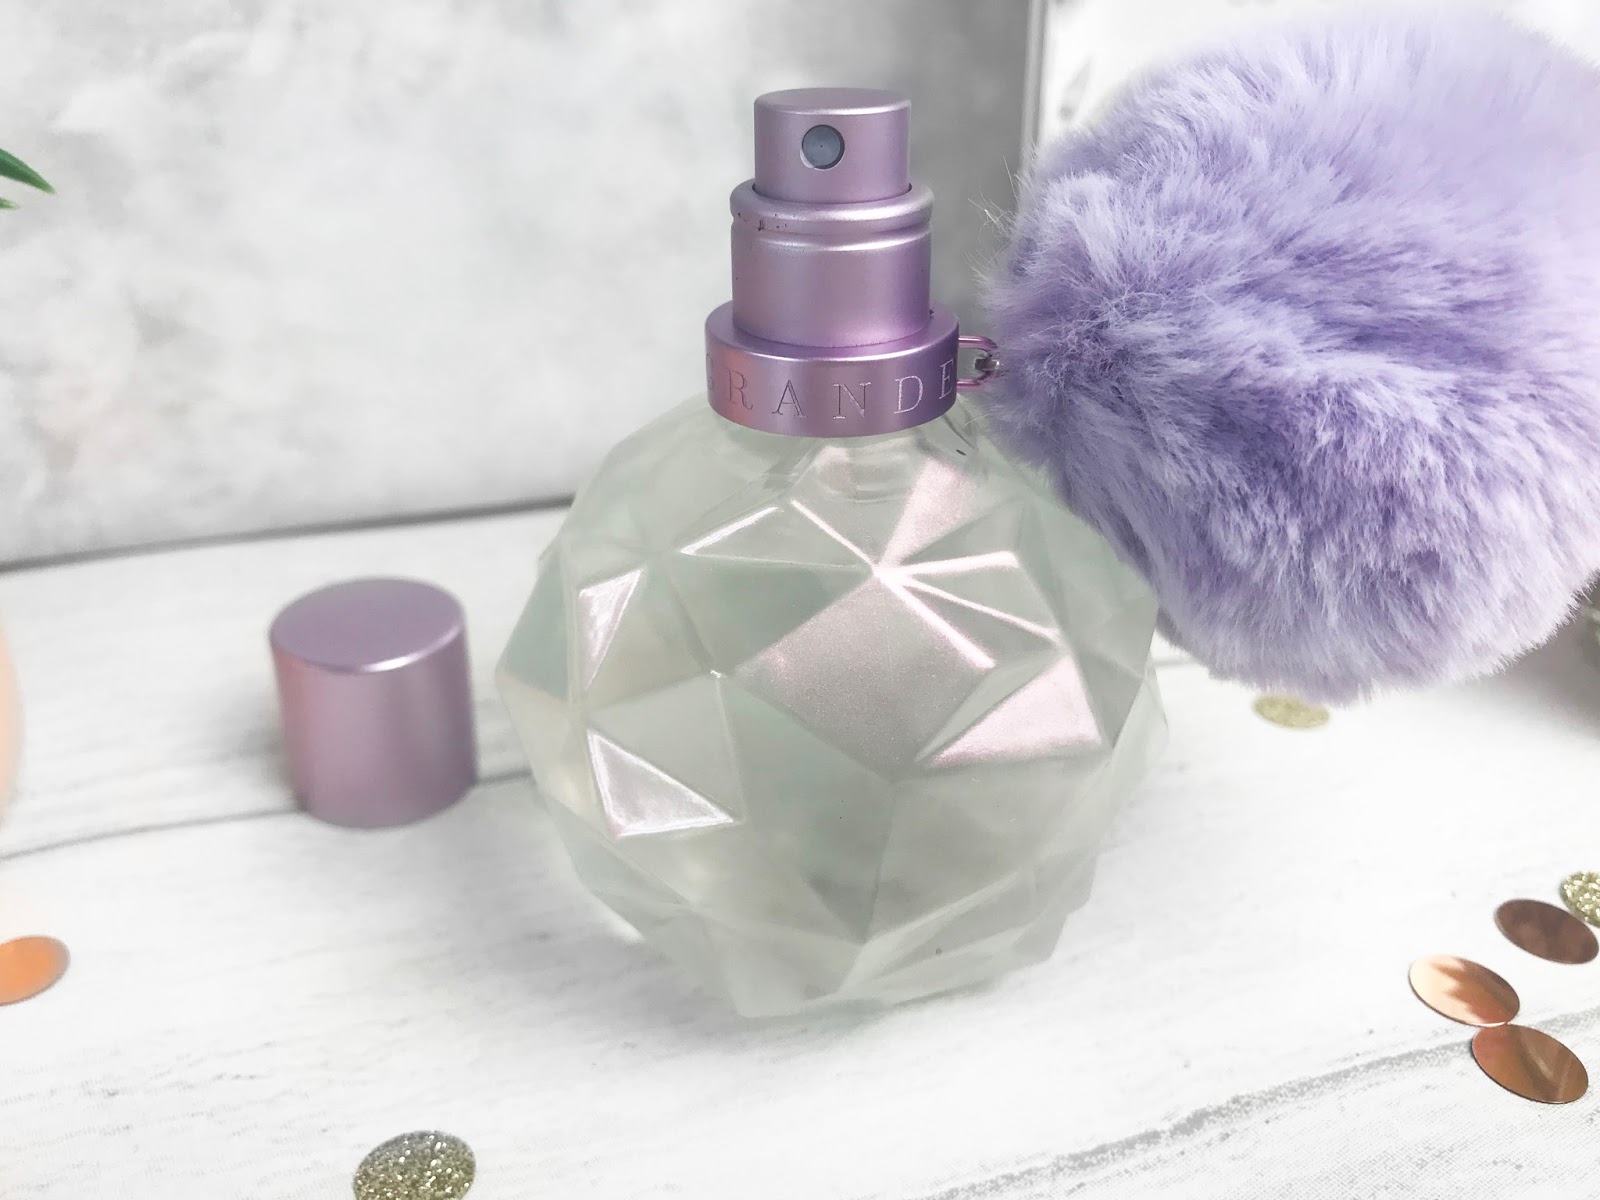 Mist and Moonlight Perfume | Halloween Inspired Fragrance